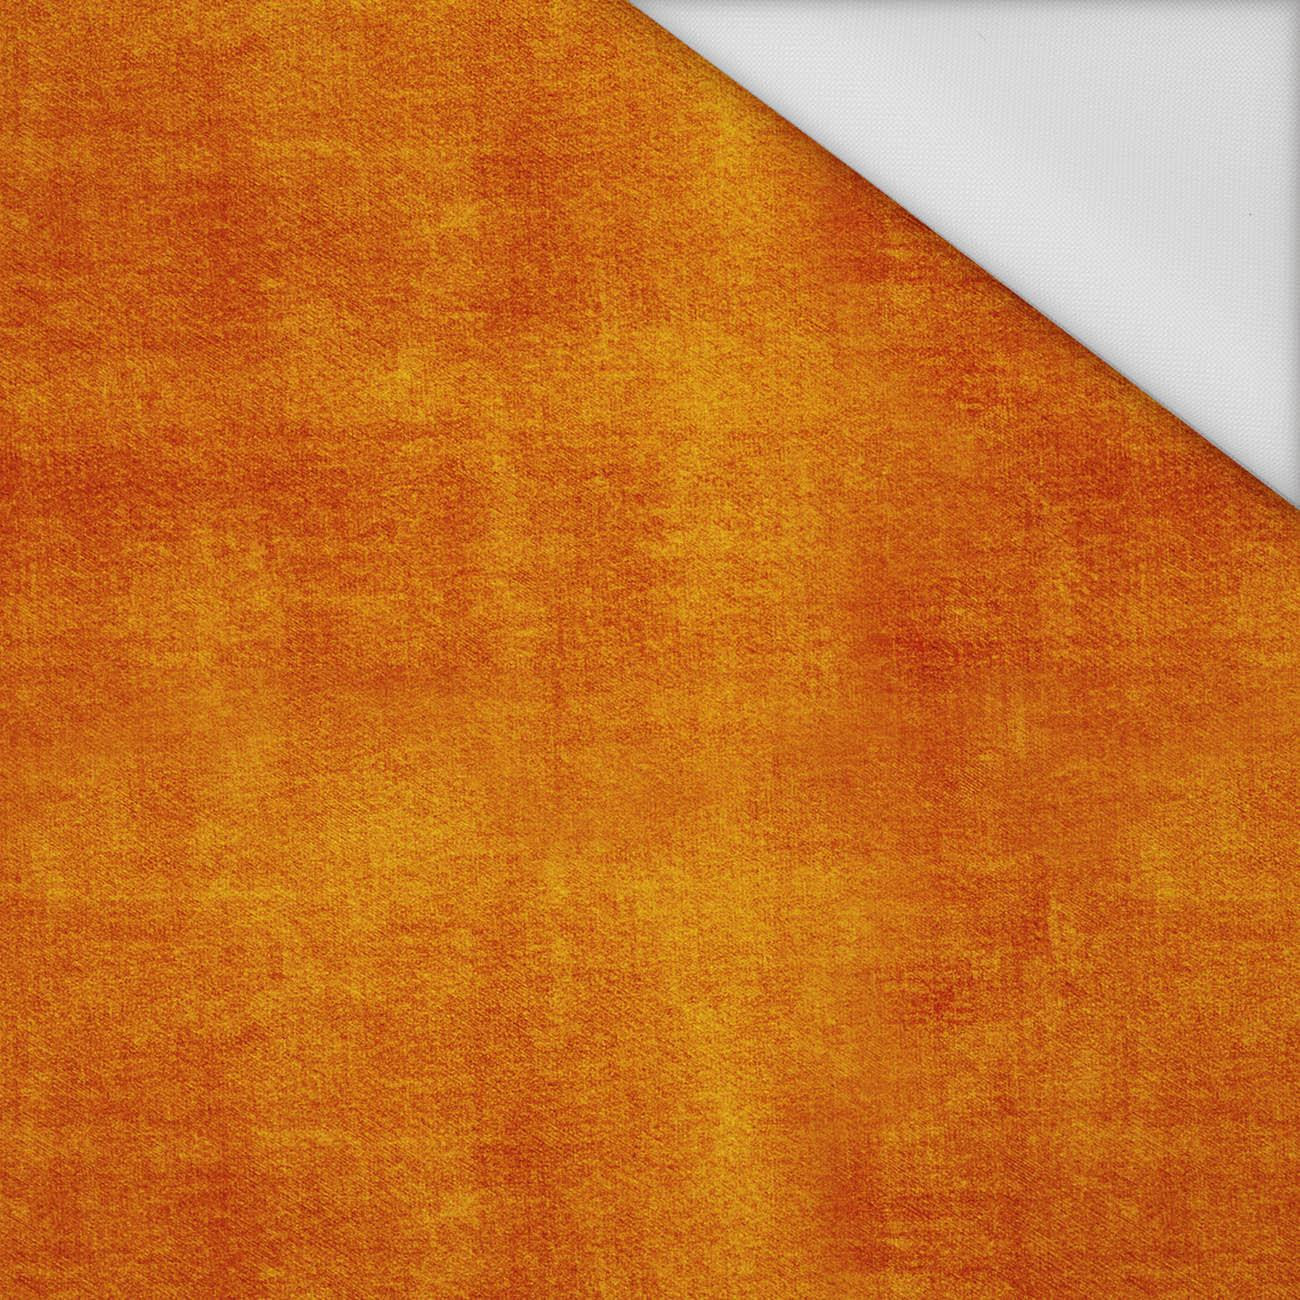 AUTUMN JEANS / orange (AUTUMN COLORS) - Waterproof woven fabric